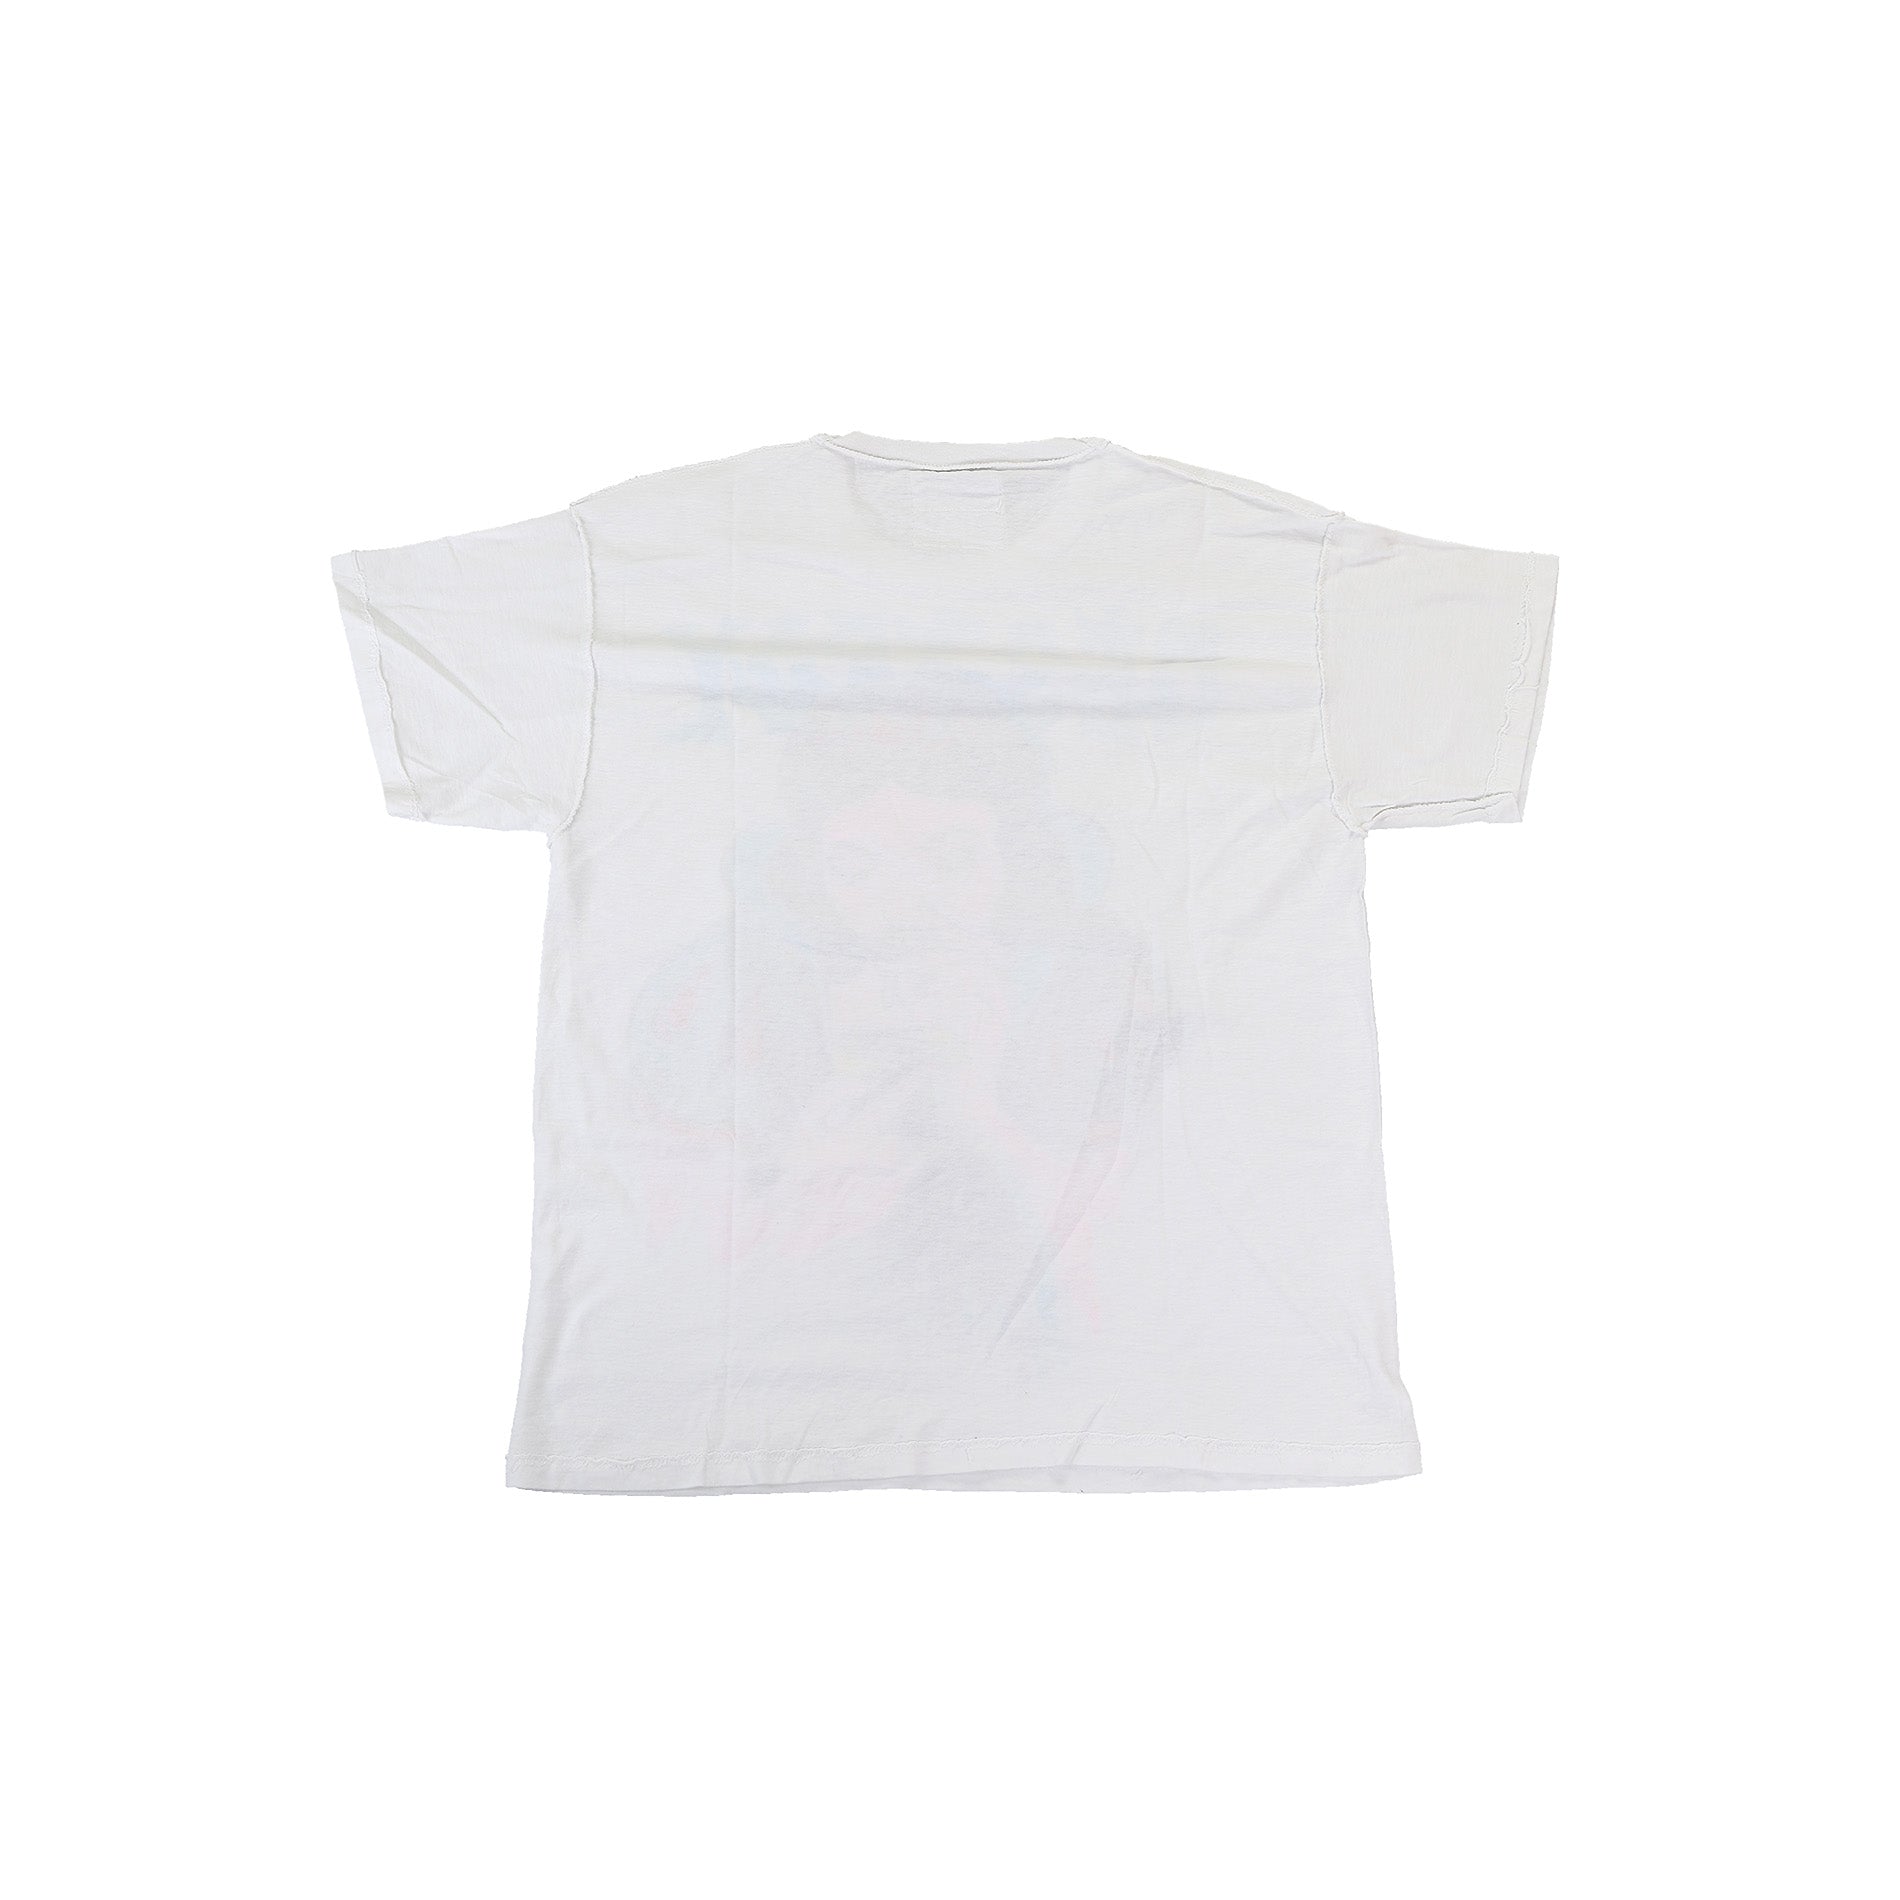 Vivienne Westwood Malcolm McLarenSeditionaries 80s Snow White T-Shirt